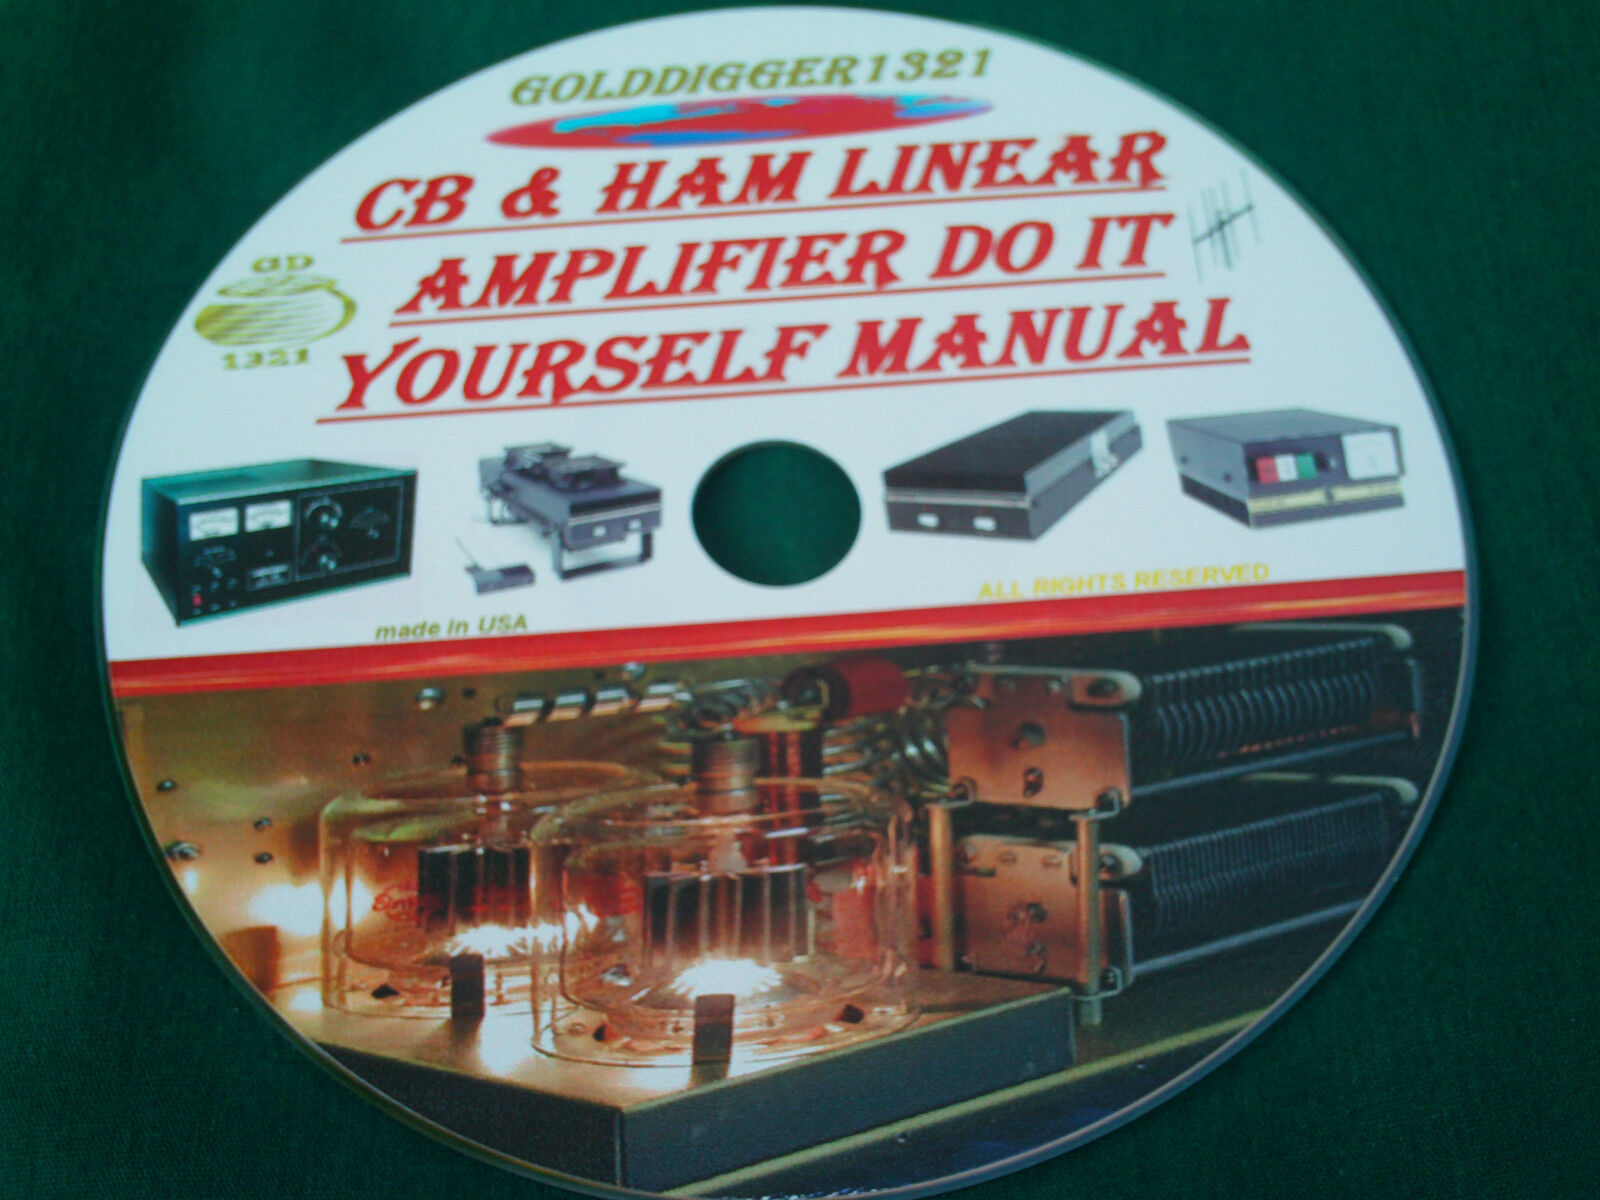 CB & HAM LINEAR AMPLIFIER DO IT YOURSELF MANUAL ON CD